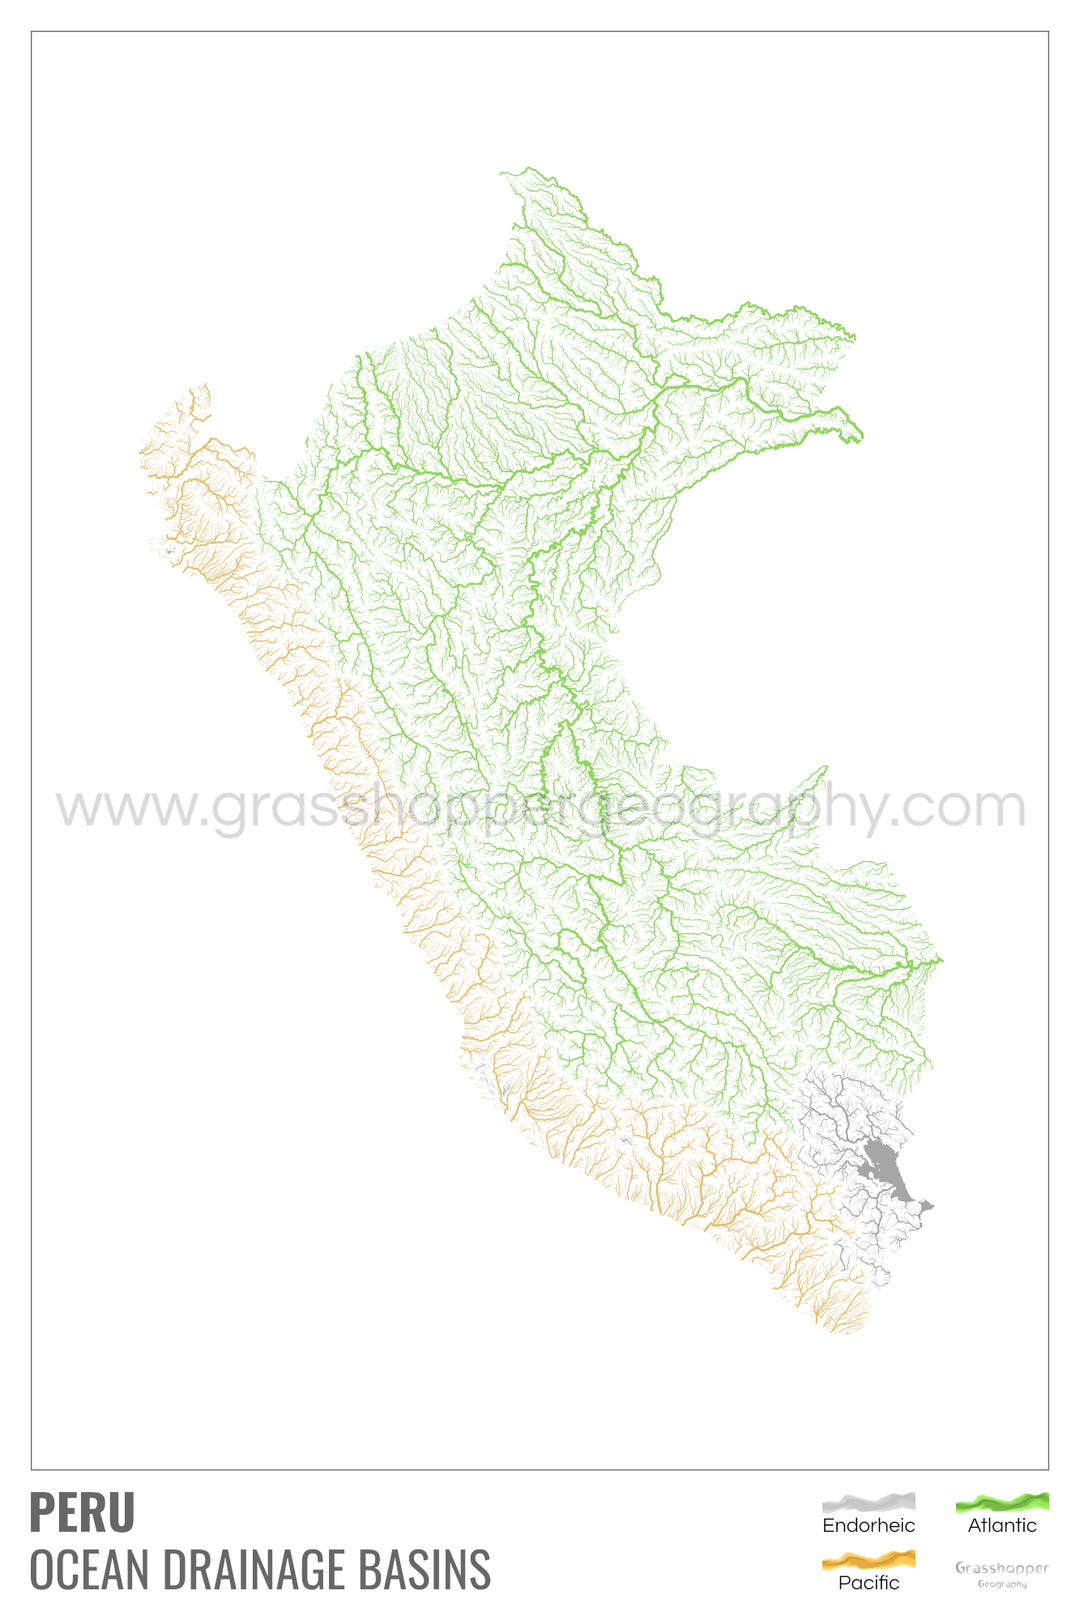 Peru - Ocean drainage basin map, white with legend v1 - Framed Print